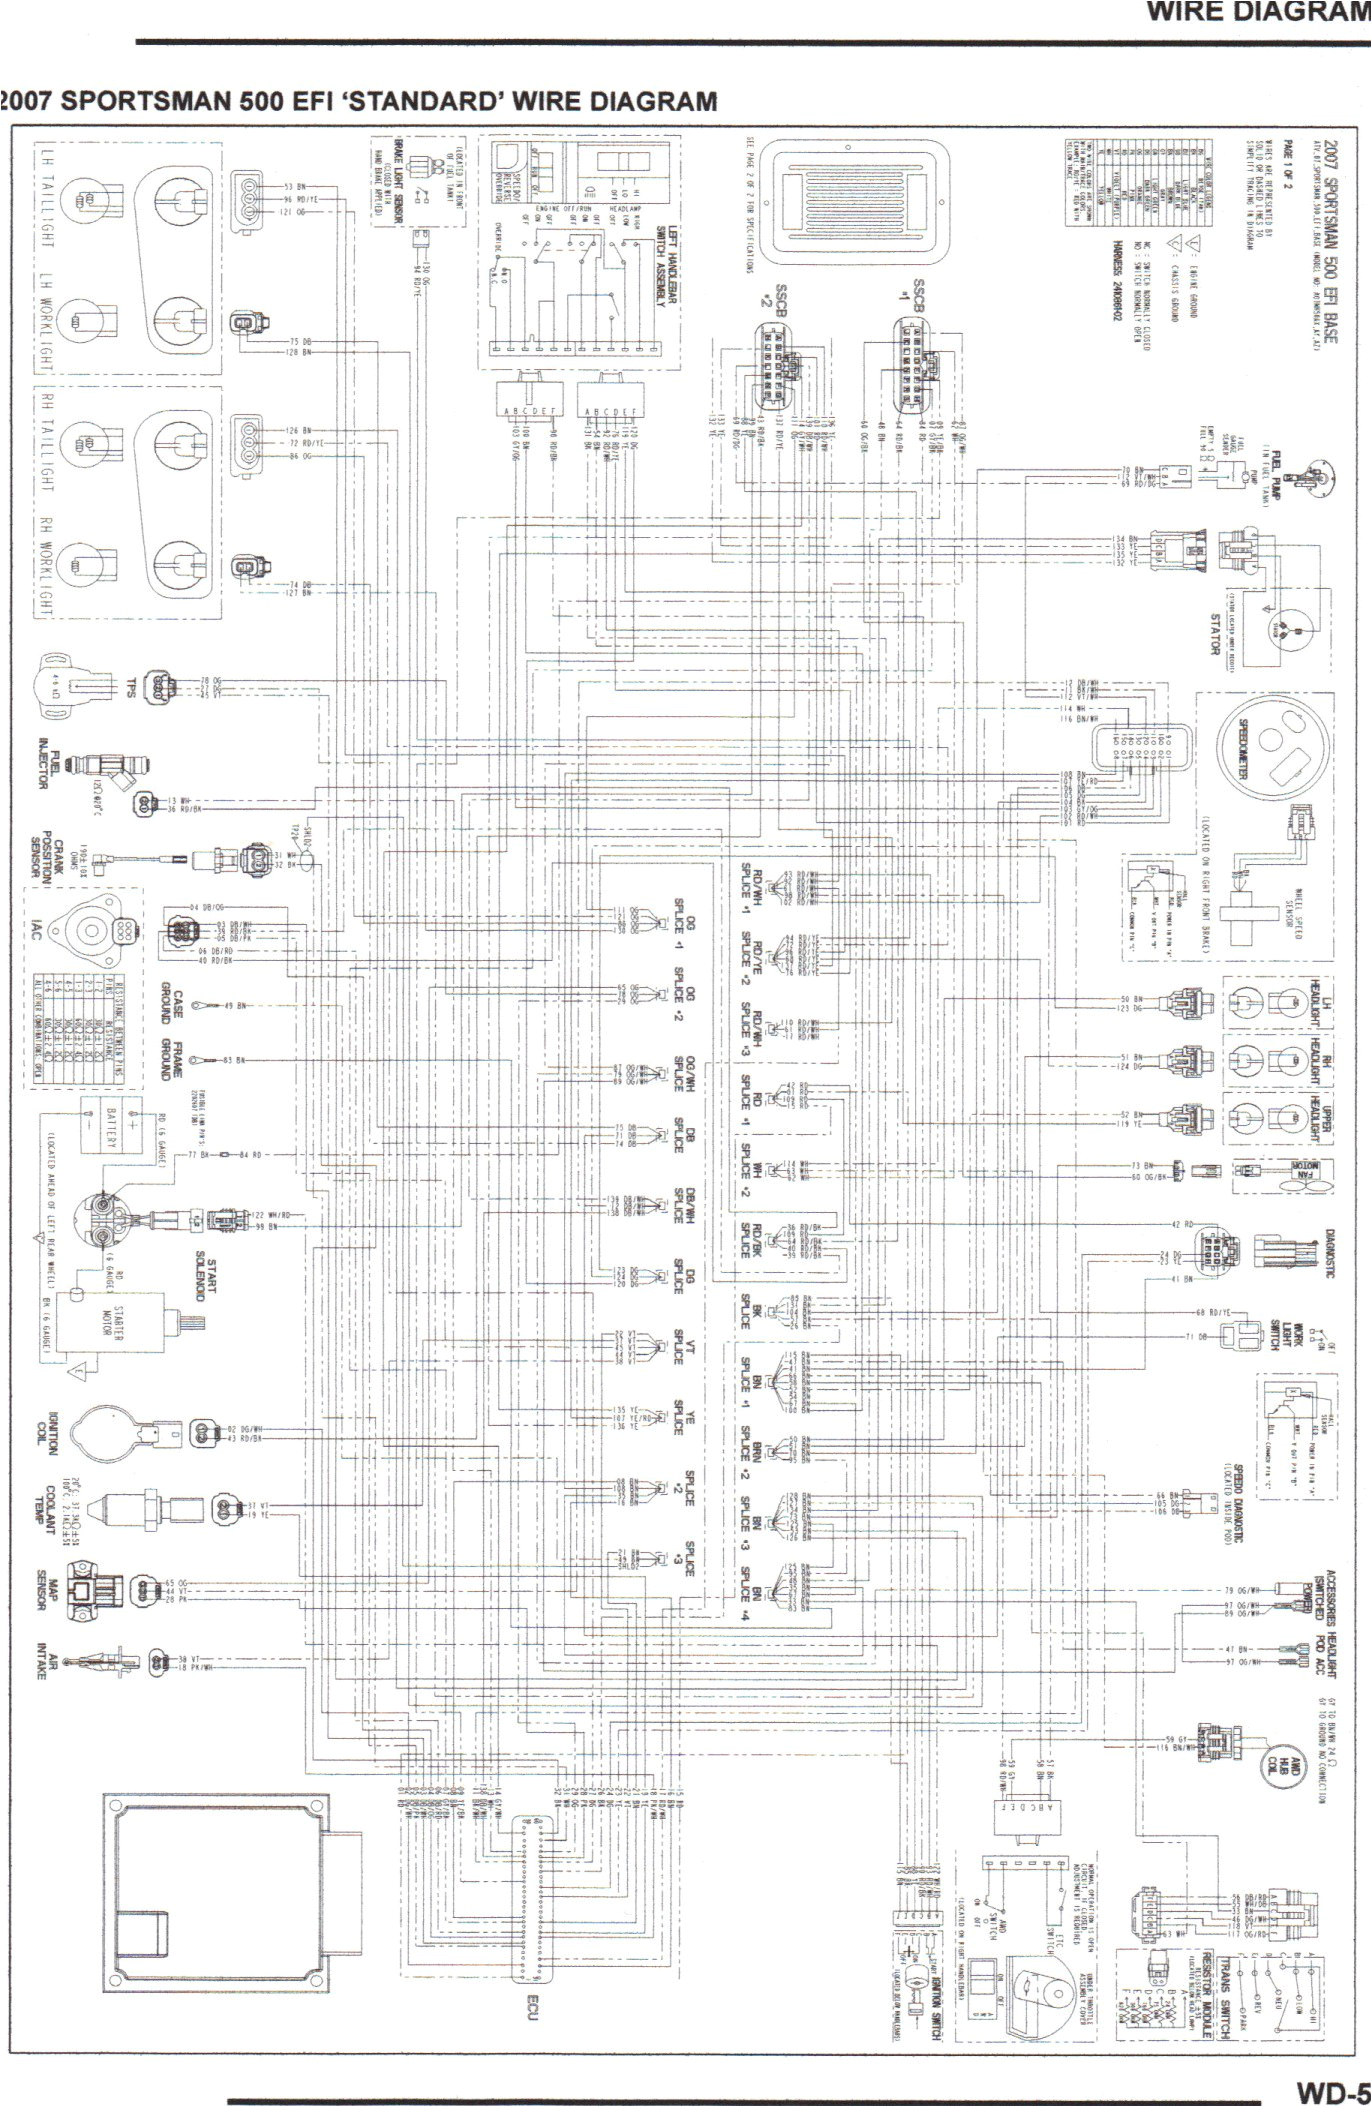 ho wiring diagram wiring diagram sheet ho wiring diagram 2006 polaris sportsman 500 ho wiring diagram